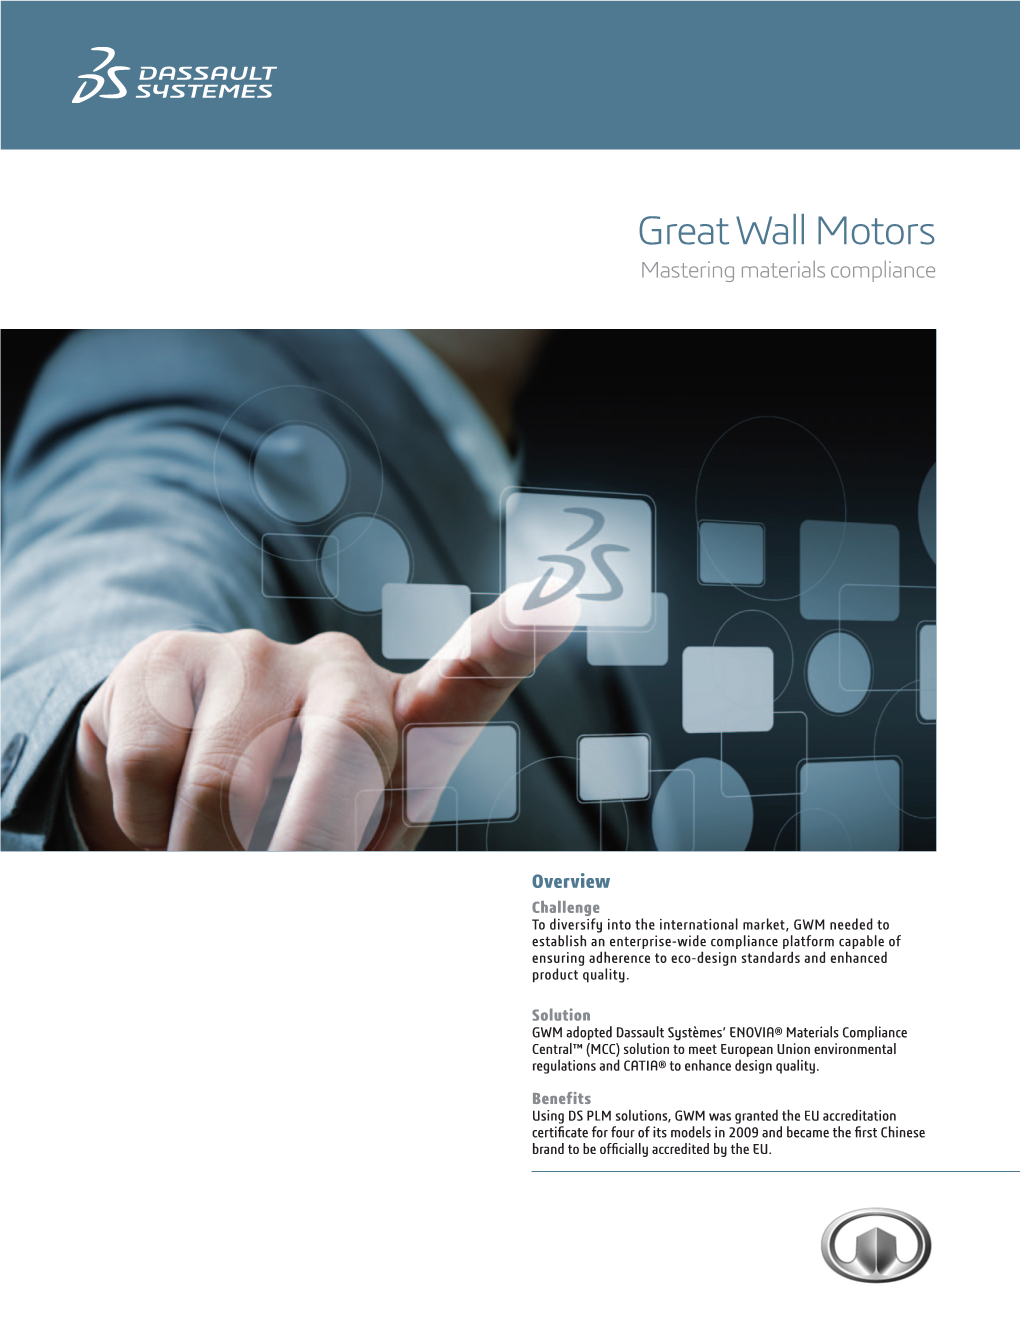 Great Wall Motors Mastering Materials Compliance